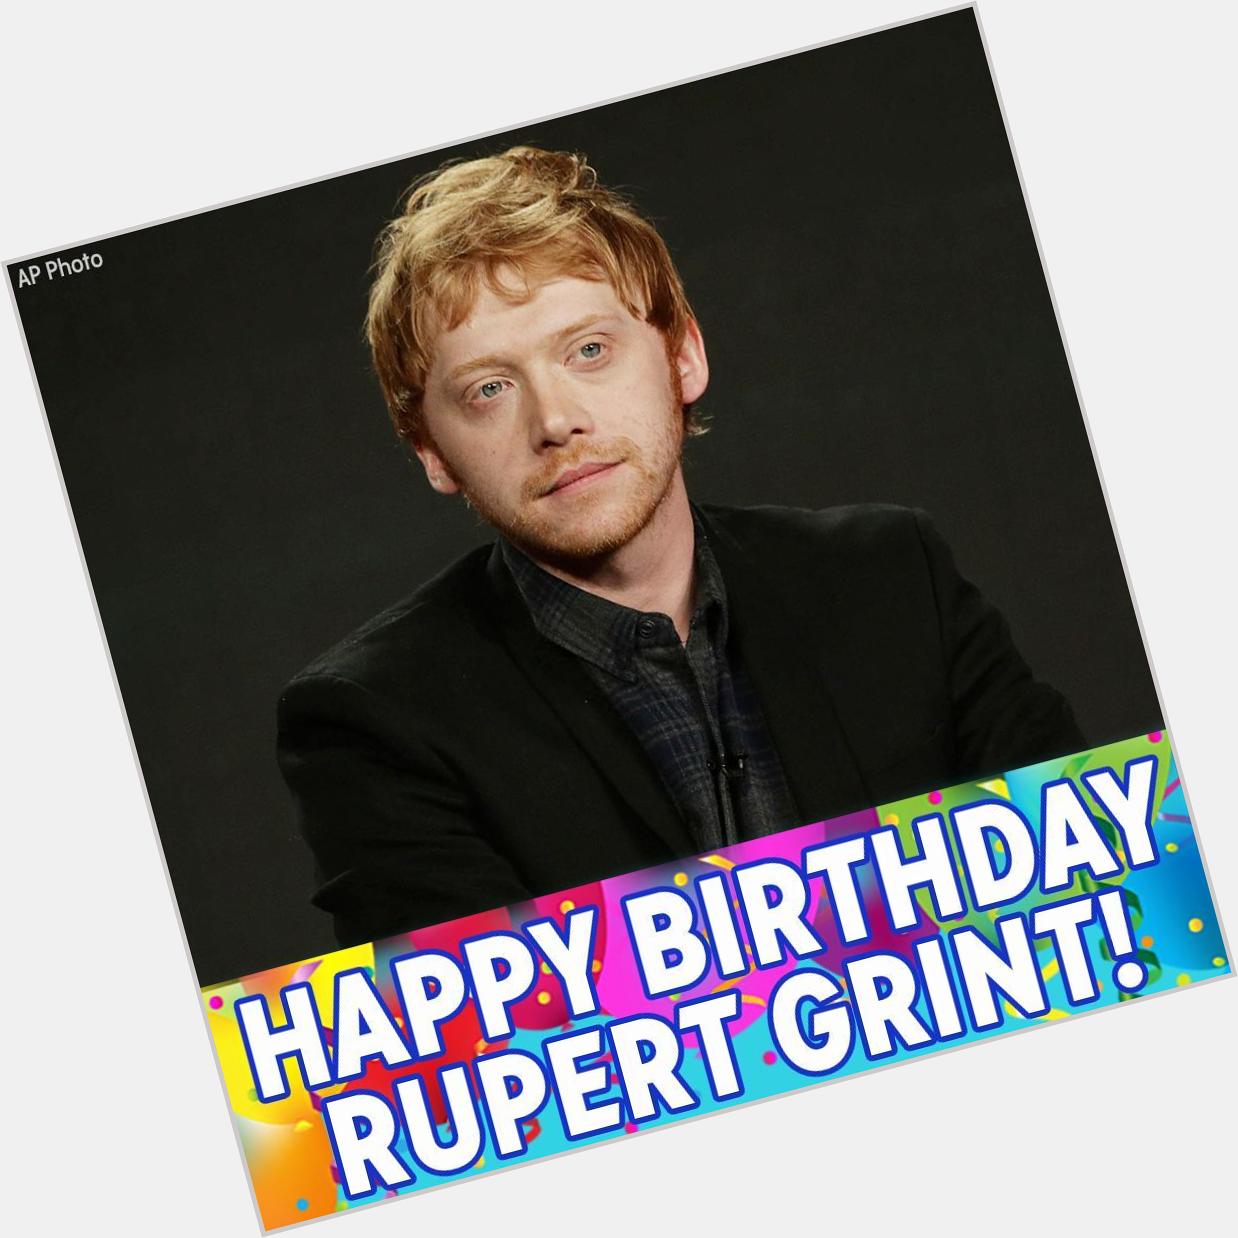 Happy birthday to Harry Potter star Rupert Grint! 